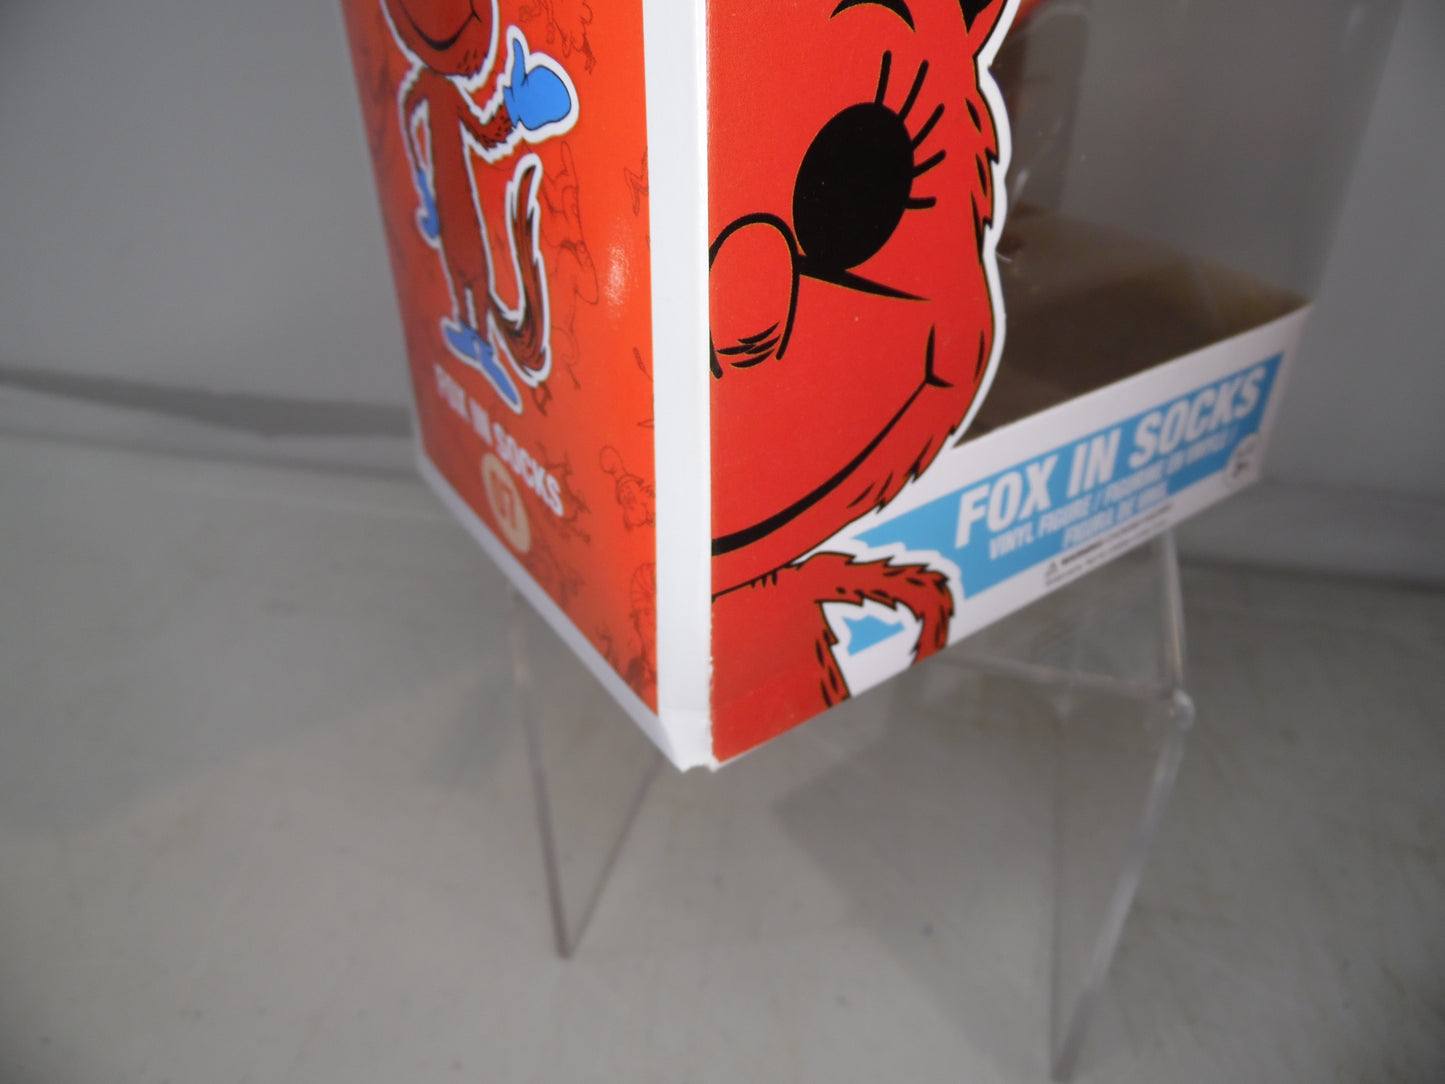 Whimsical Wonders: Funko Pop Books - Dr. Seuss Fox in Sox